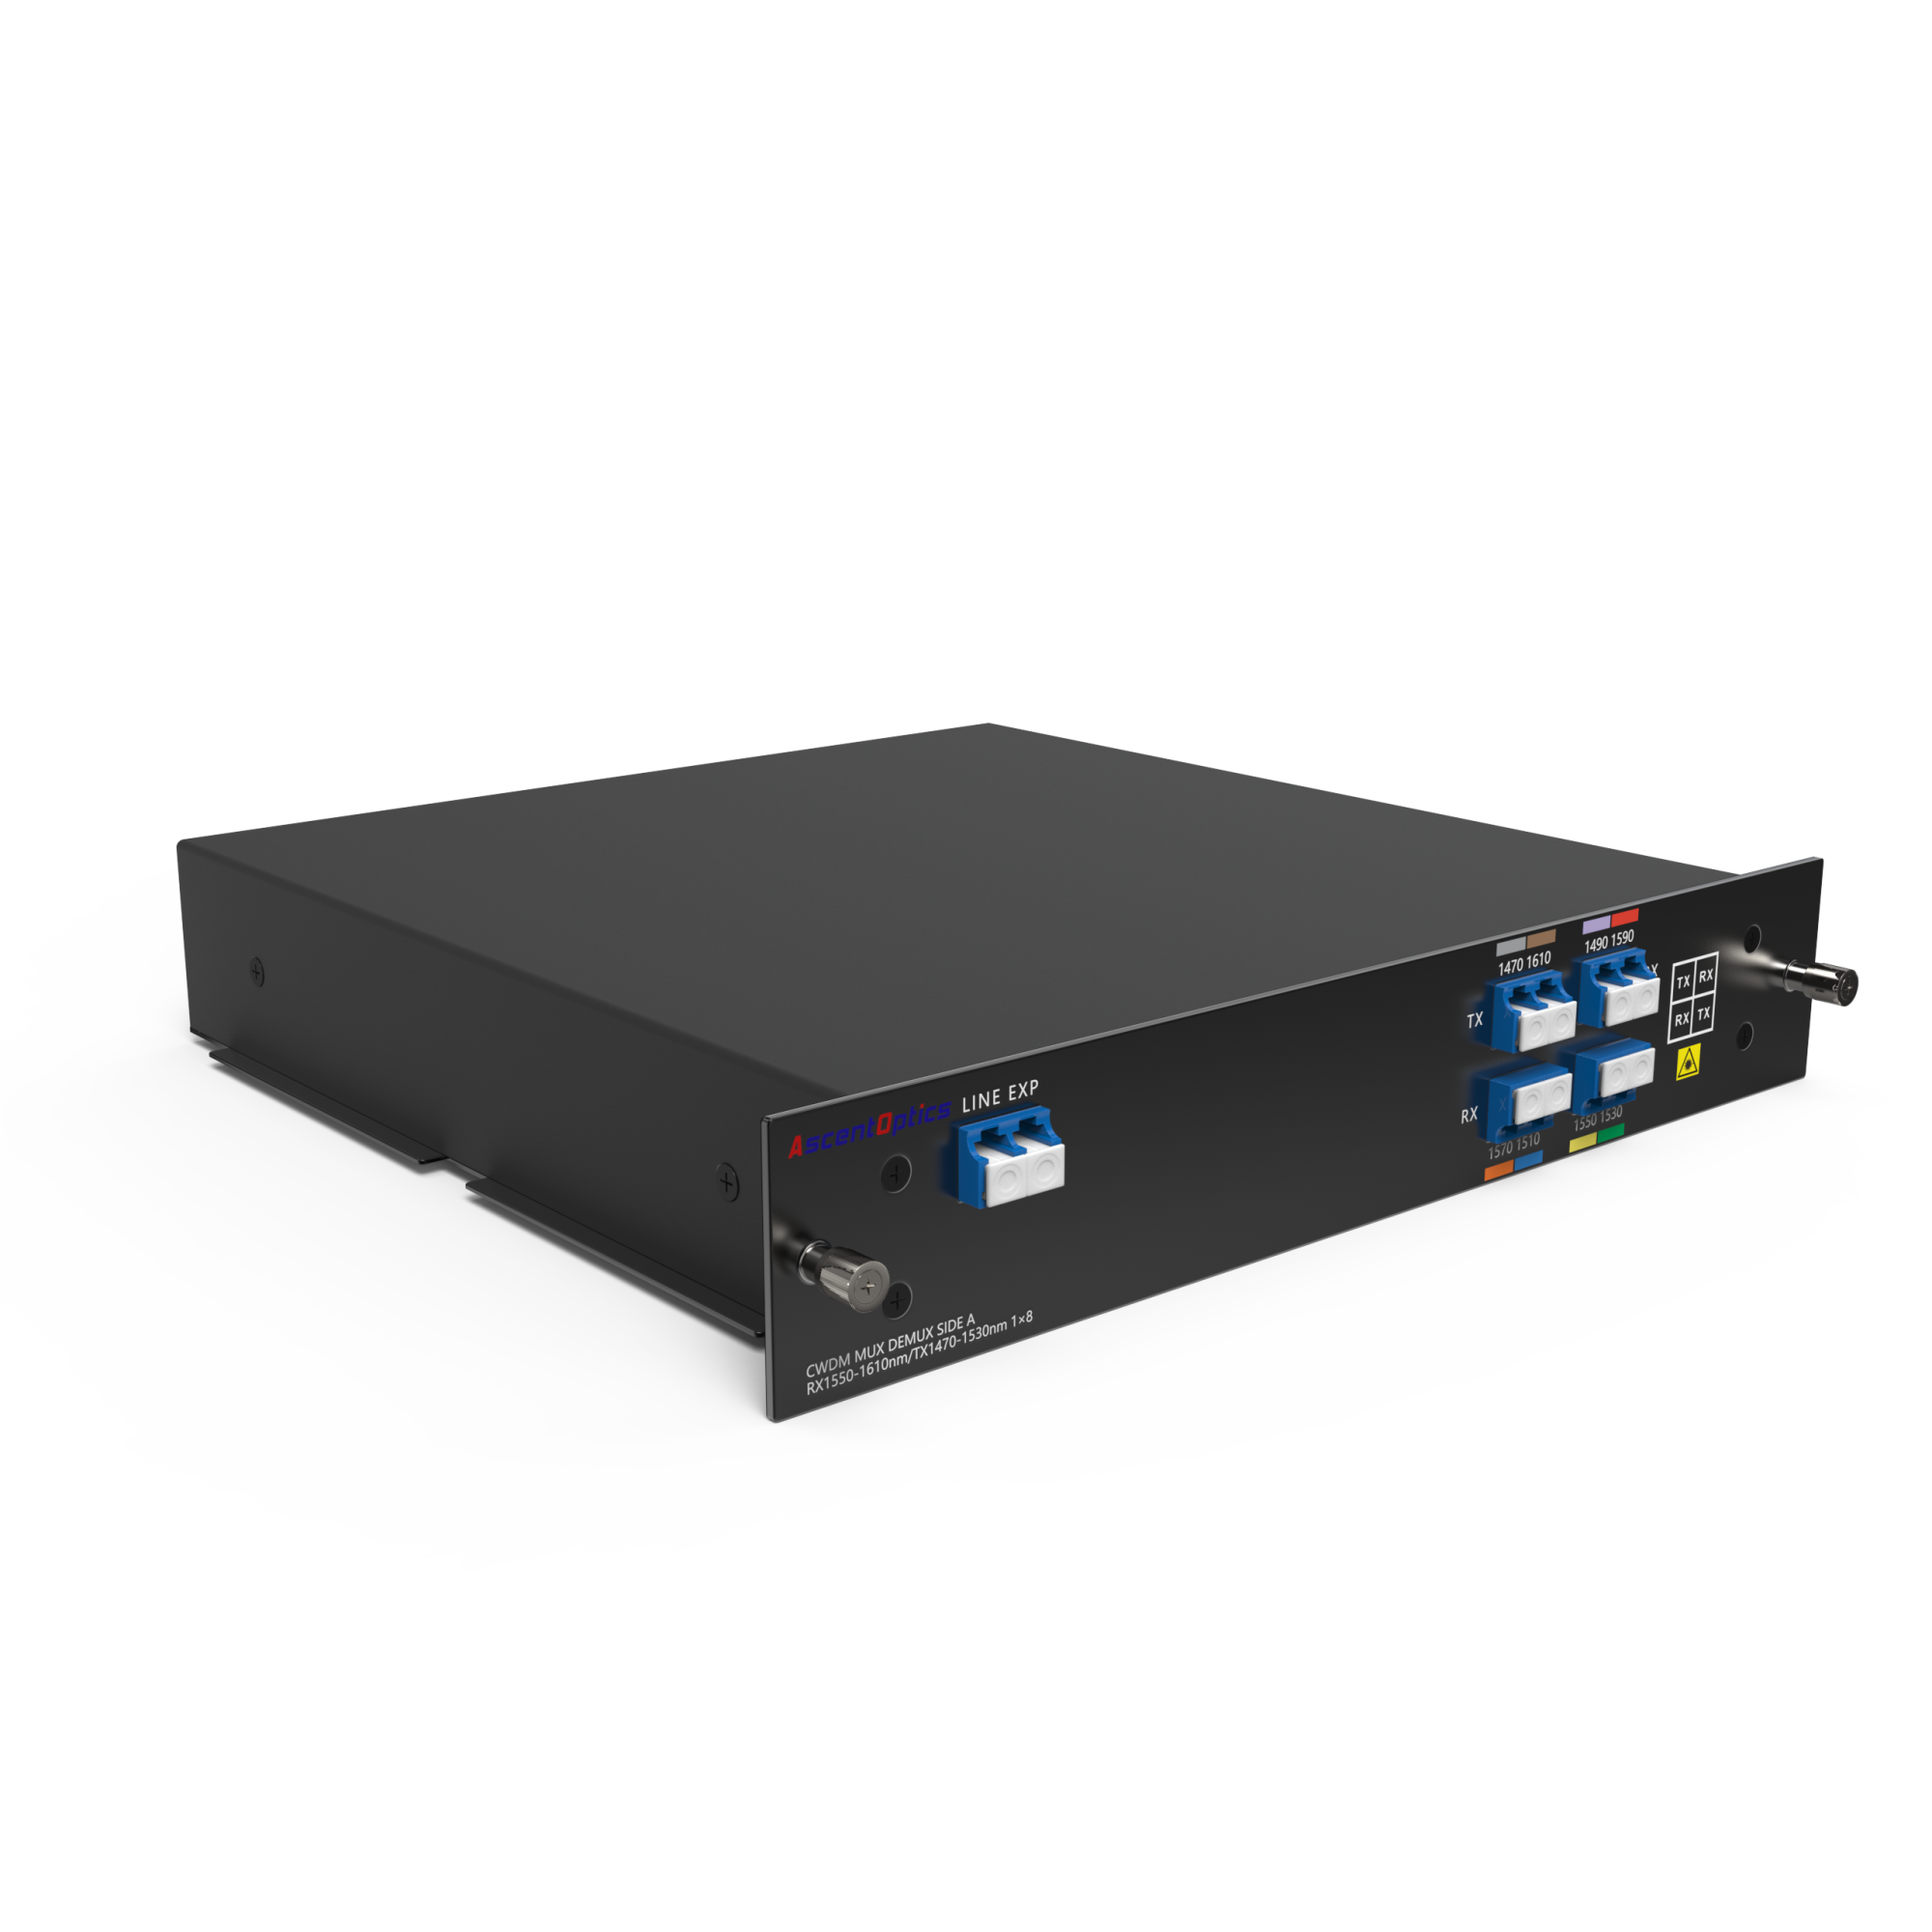 Single Fiber CWDM Mux/Demux 4CH 8 Wavelengths 1470 to 1610nm Side A, LGX Box